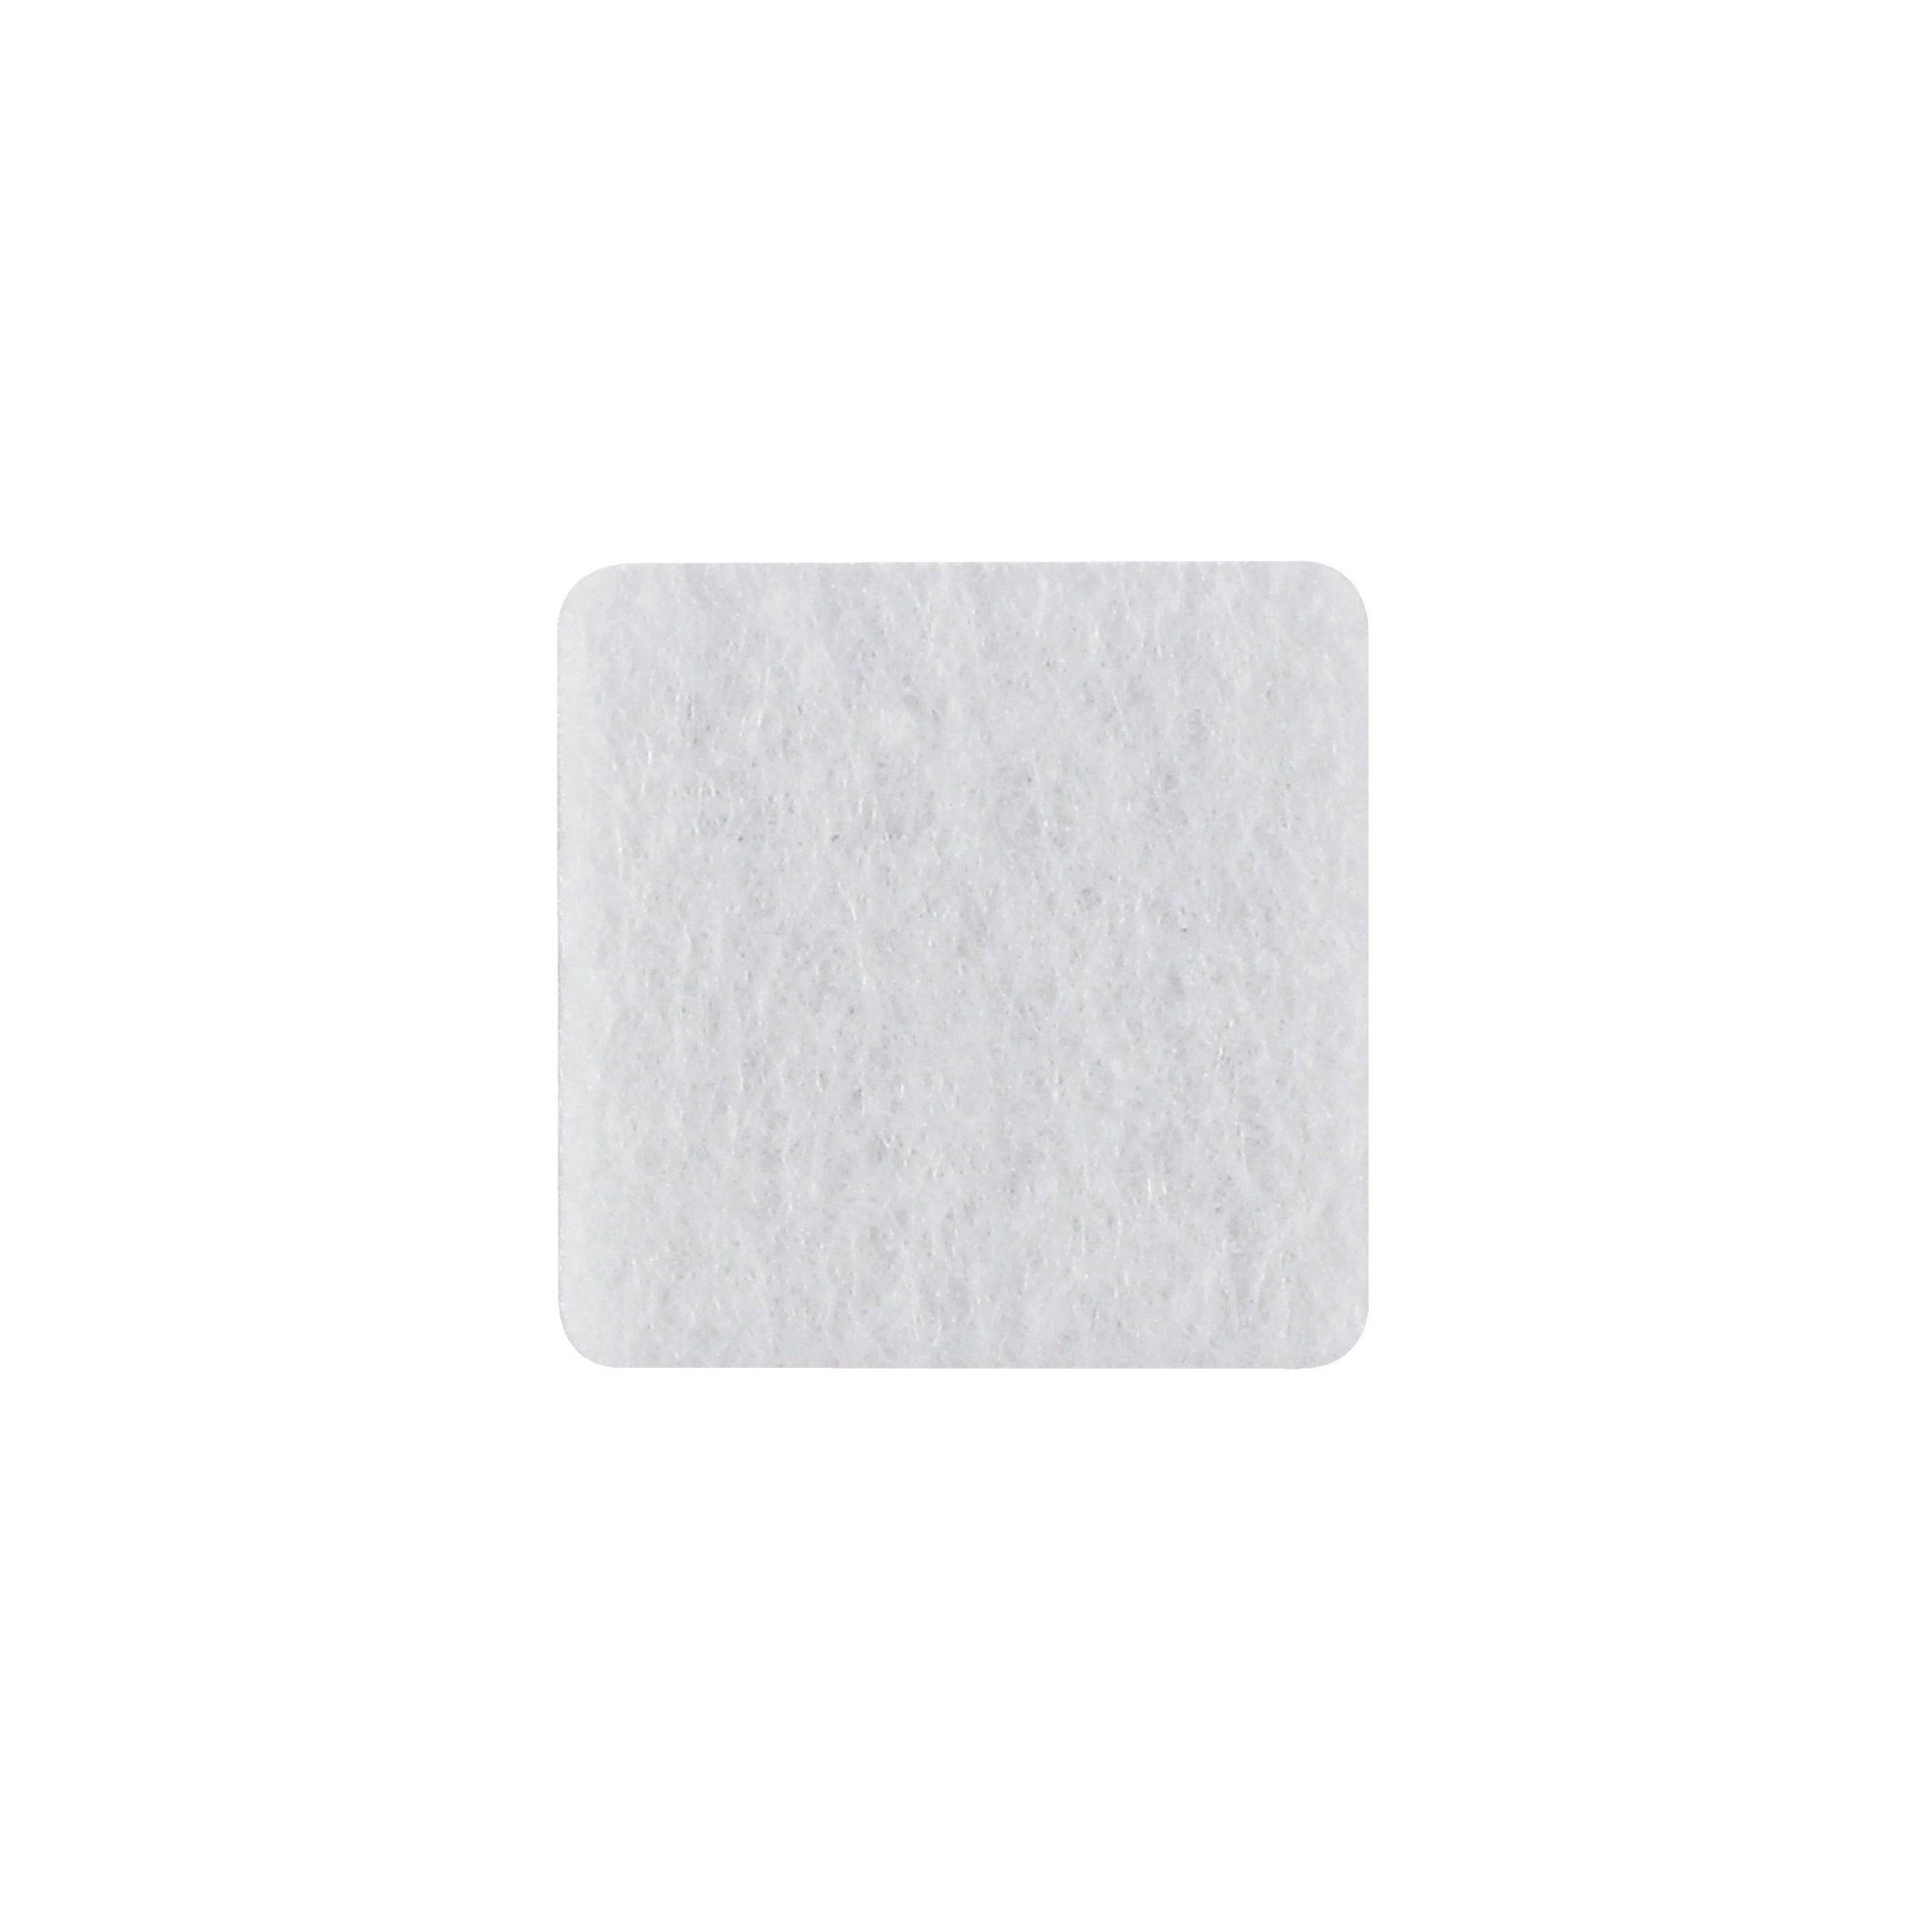 Anti-krasvilt, zelfklevend wit 25 x 25 mm per 9 stuks - BLADI meubelstoffen